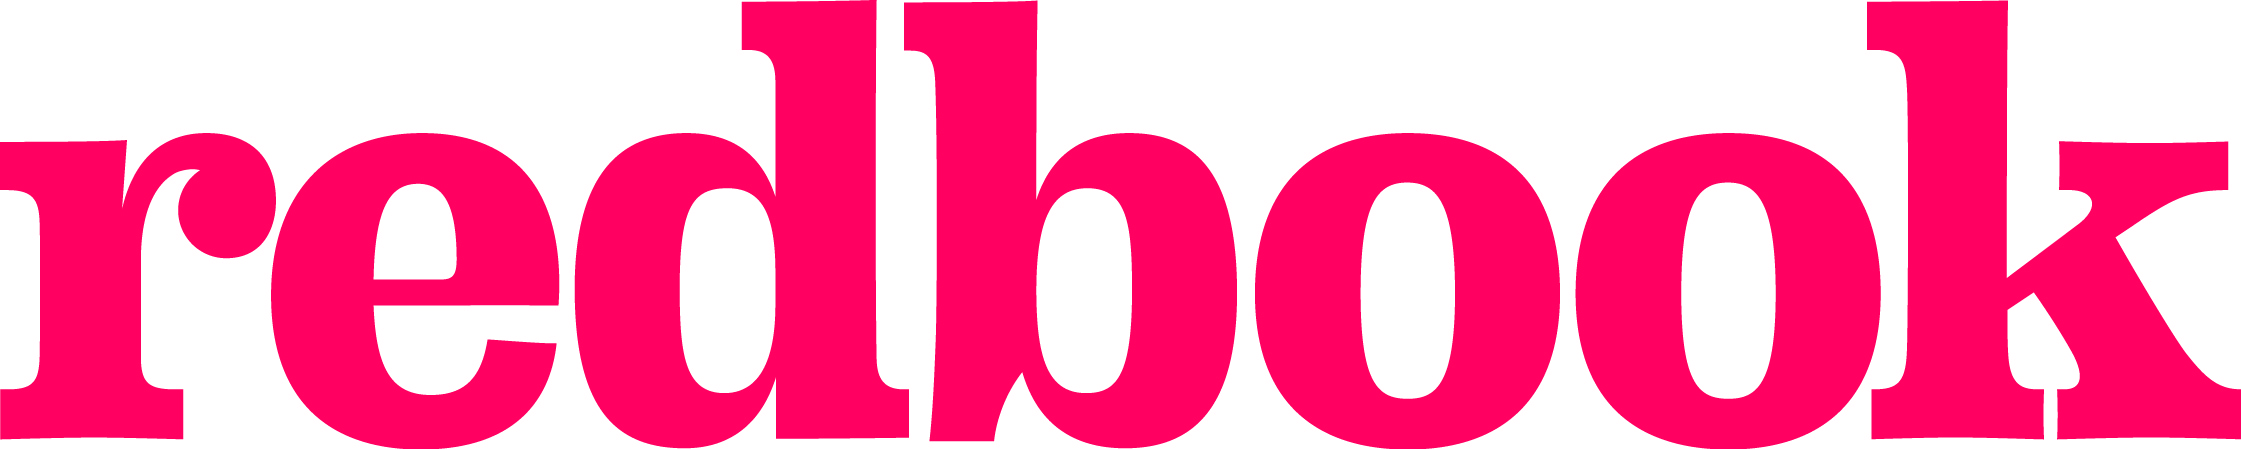 redbook-logo